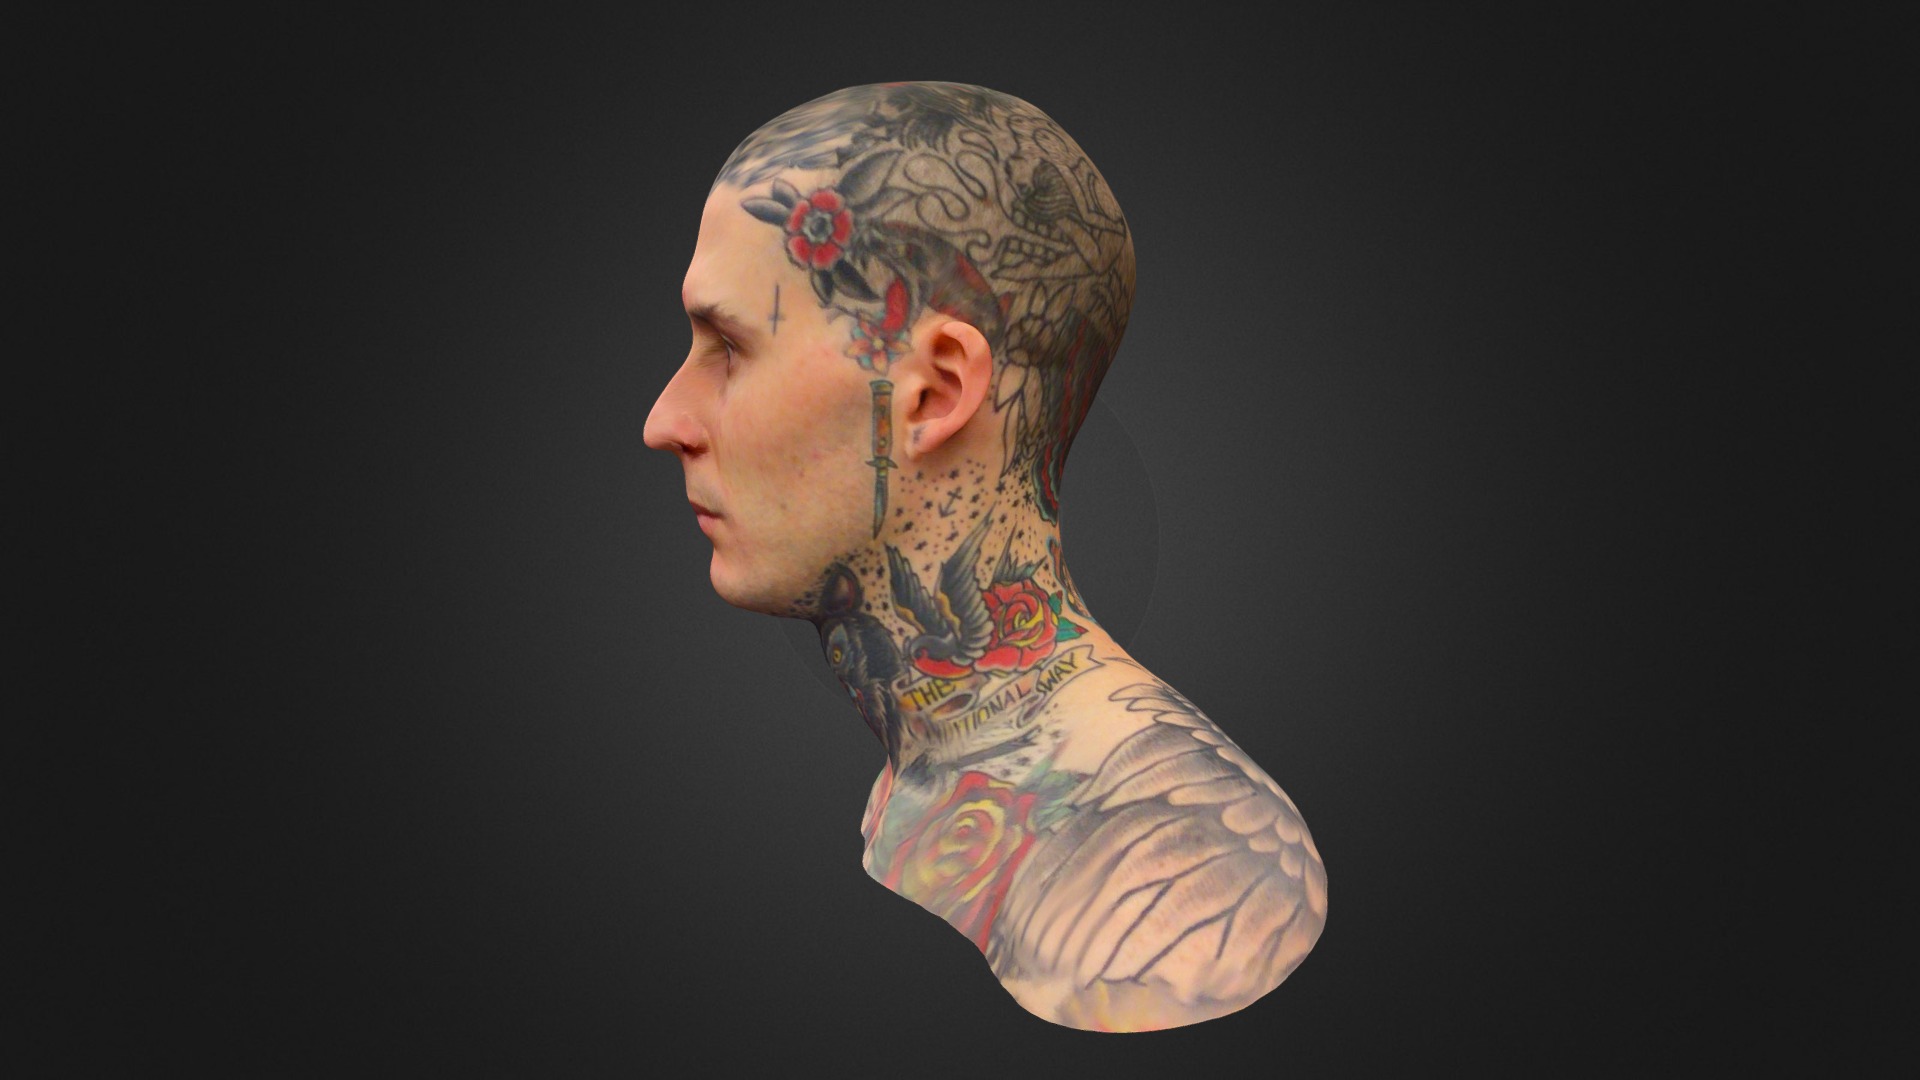 Captured by Don Darkson at Tahiti Felix's Master Tattoo Australla - Uber head tattoo progress - 3D model by TheDarkSunProject (@darksunproject) 3d model